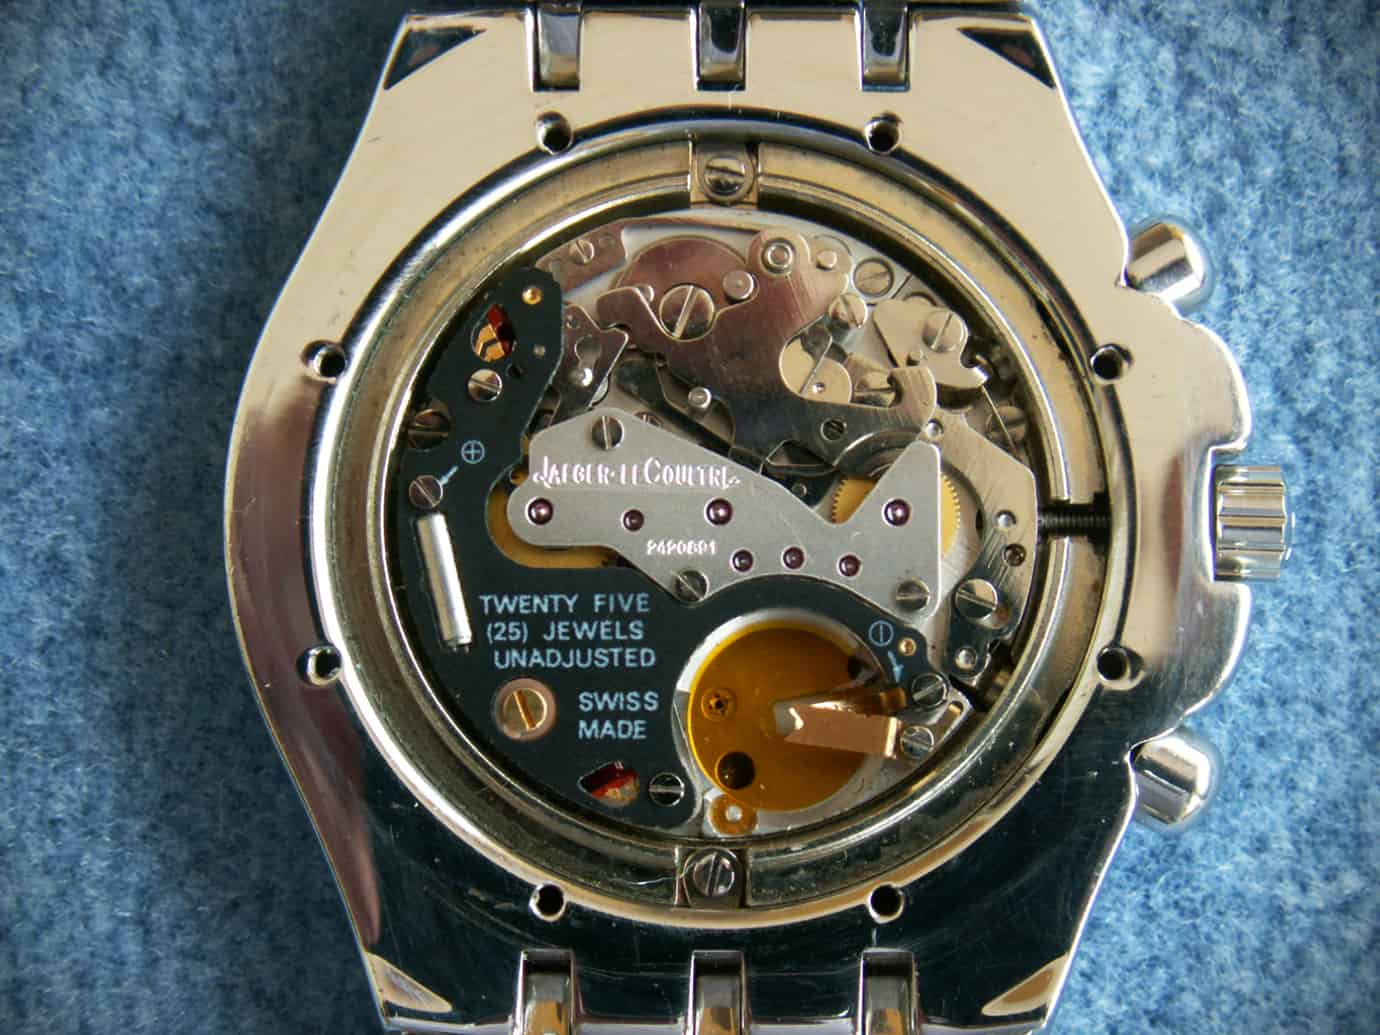 Meca-Quartz caliber 631 from Jaeger LeCoultre chronography watch